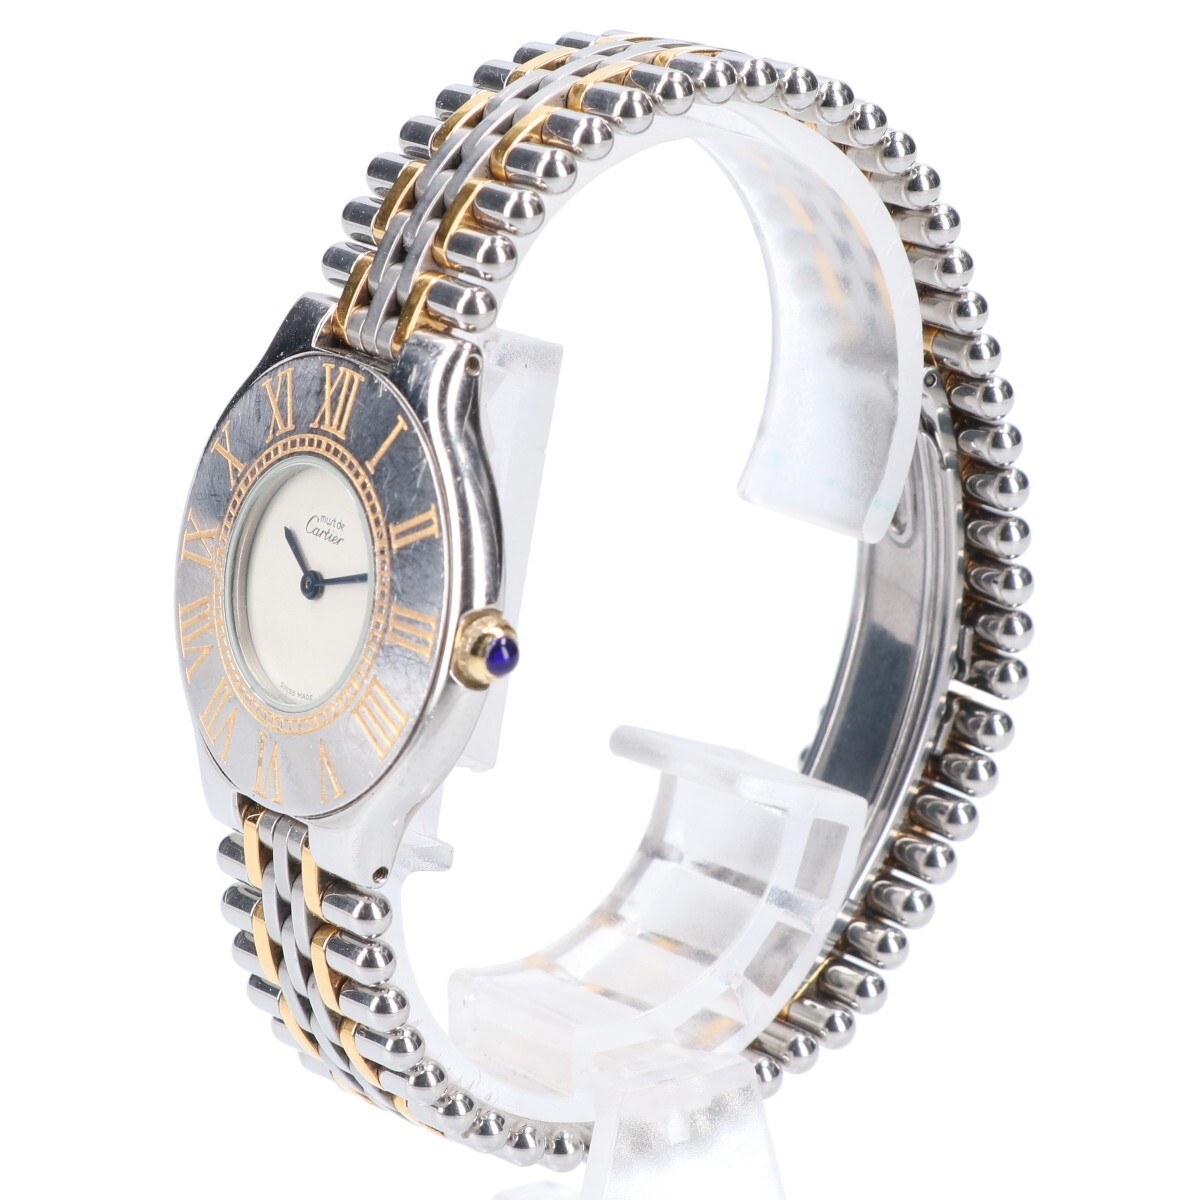 Cartier カルティエ カルティエマスト21 ヴァンテアン コンビ クオーツ 腕時計 シルバー/ゴールド レディースの画像3